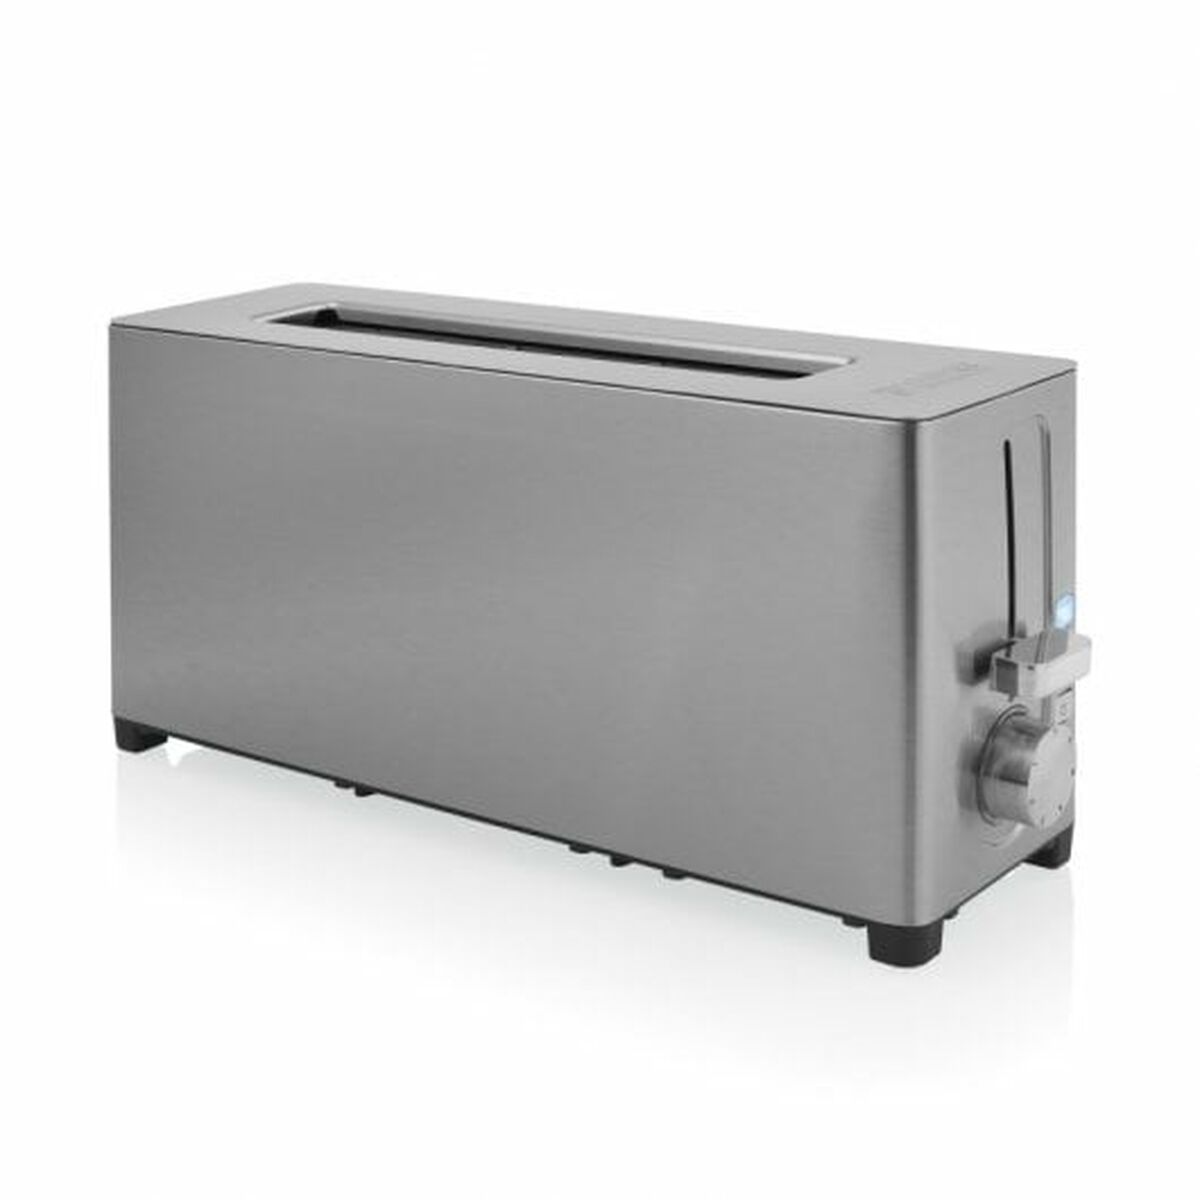 Toaster Princess 01.142401.01.001 1050 W Edelstahl - CA International 